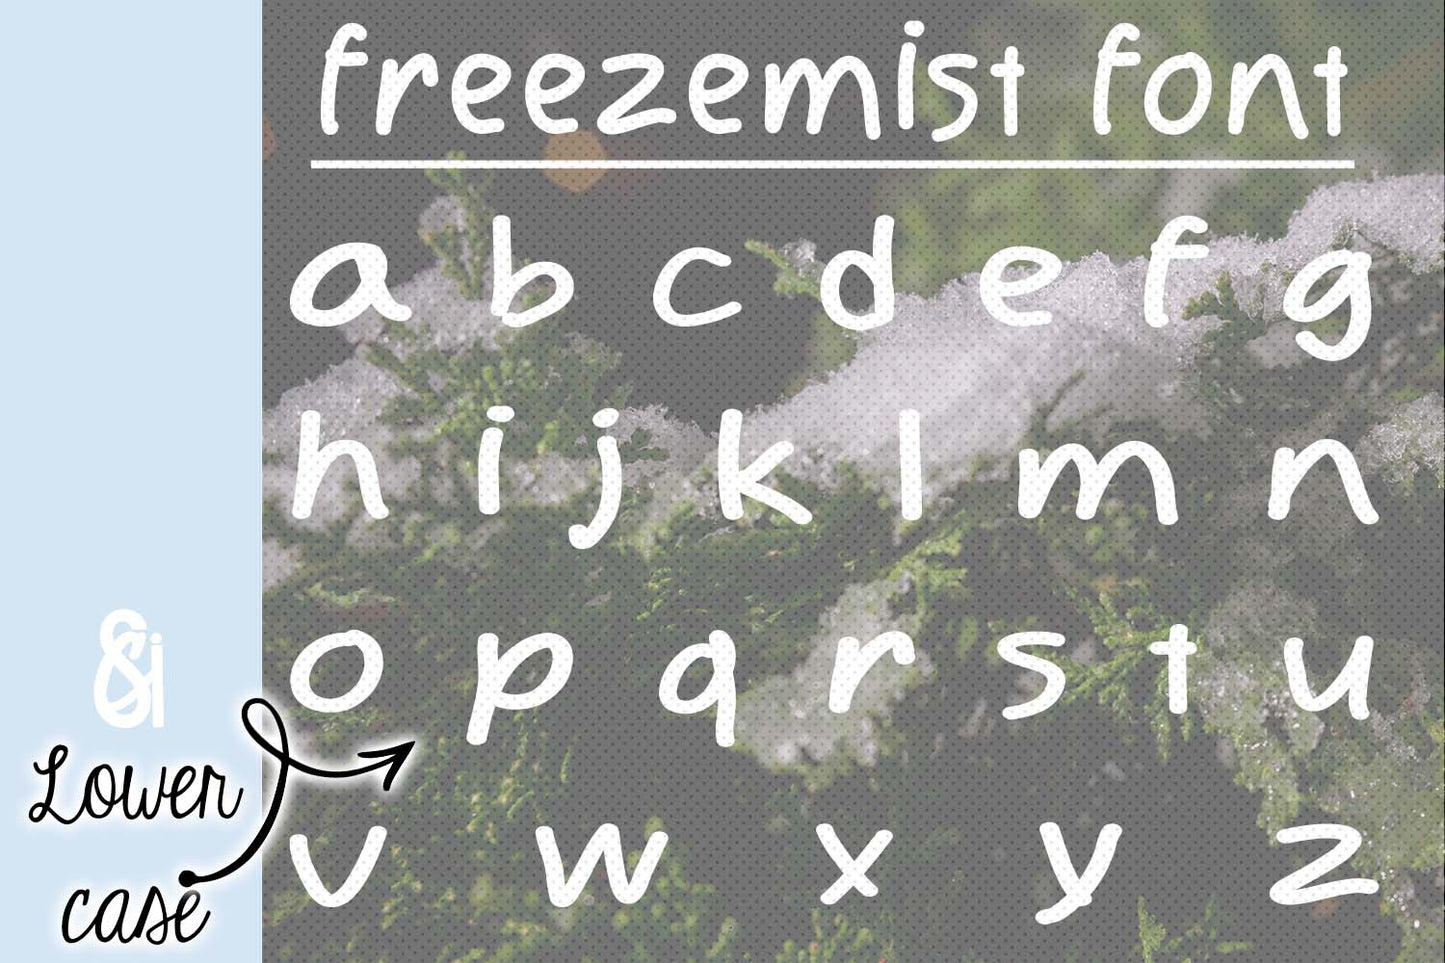 Freezemist Font